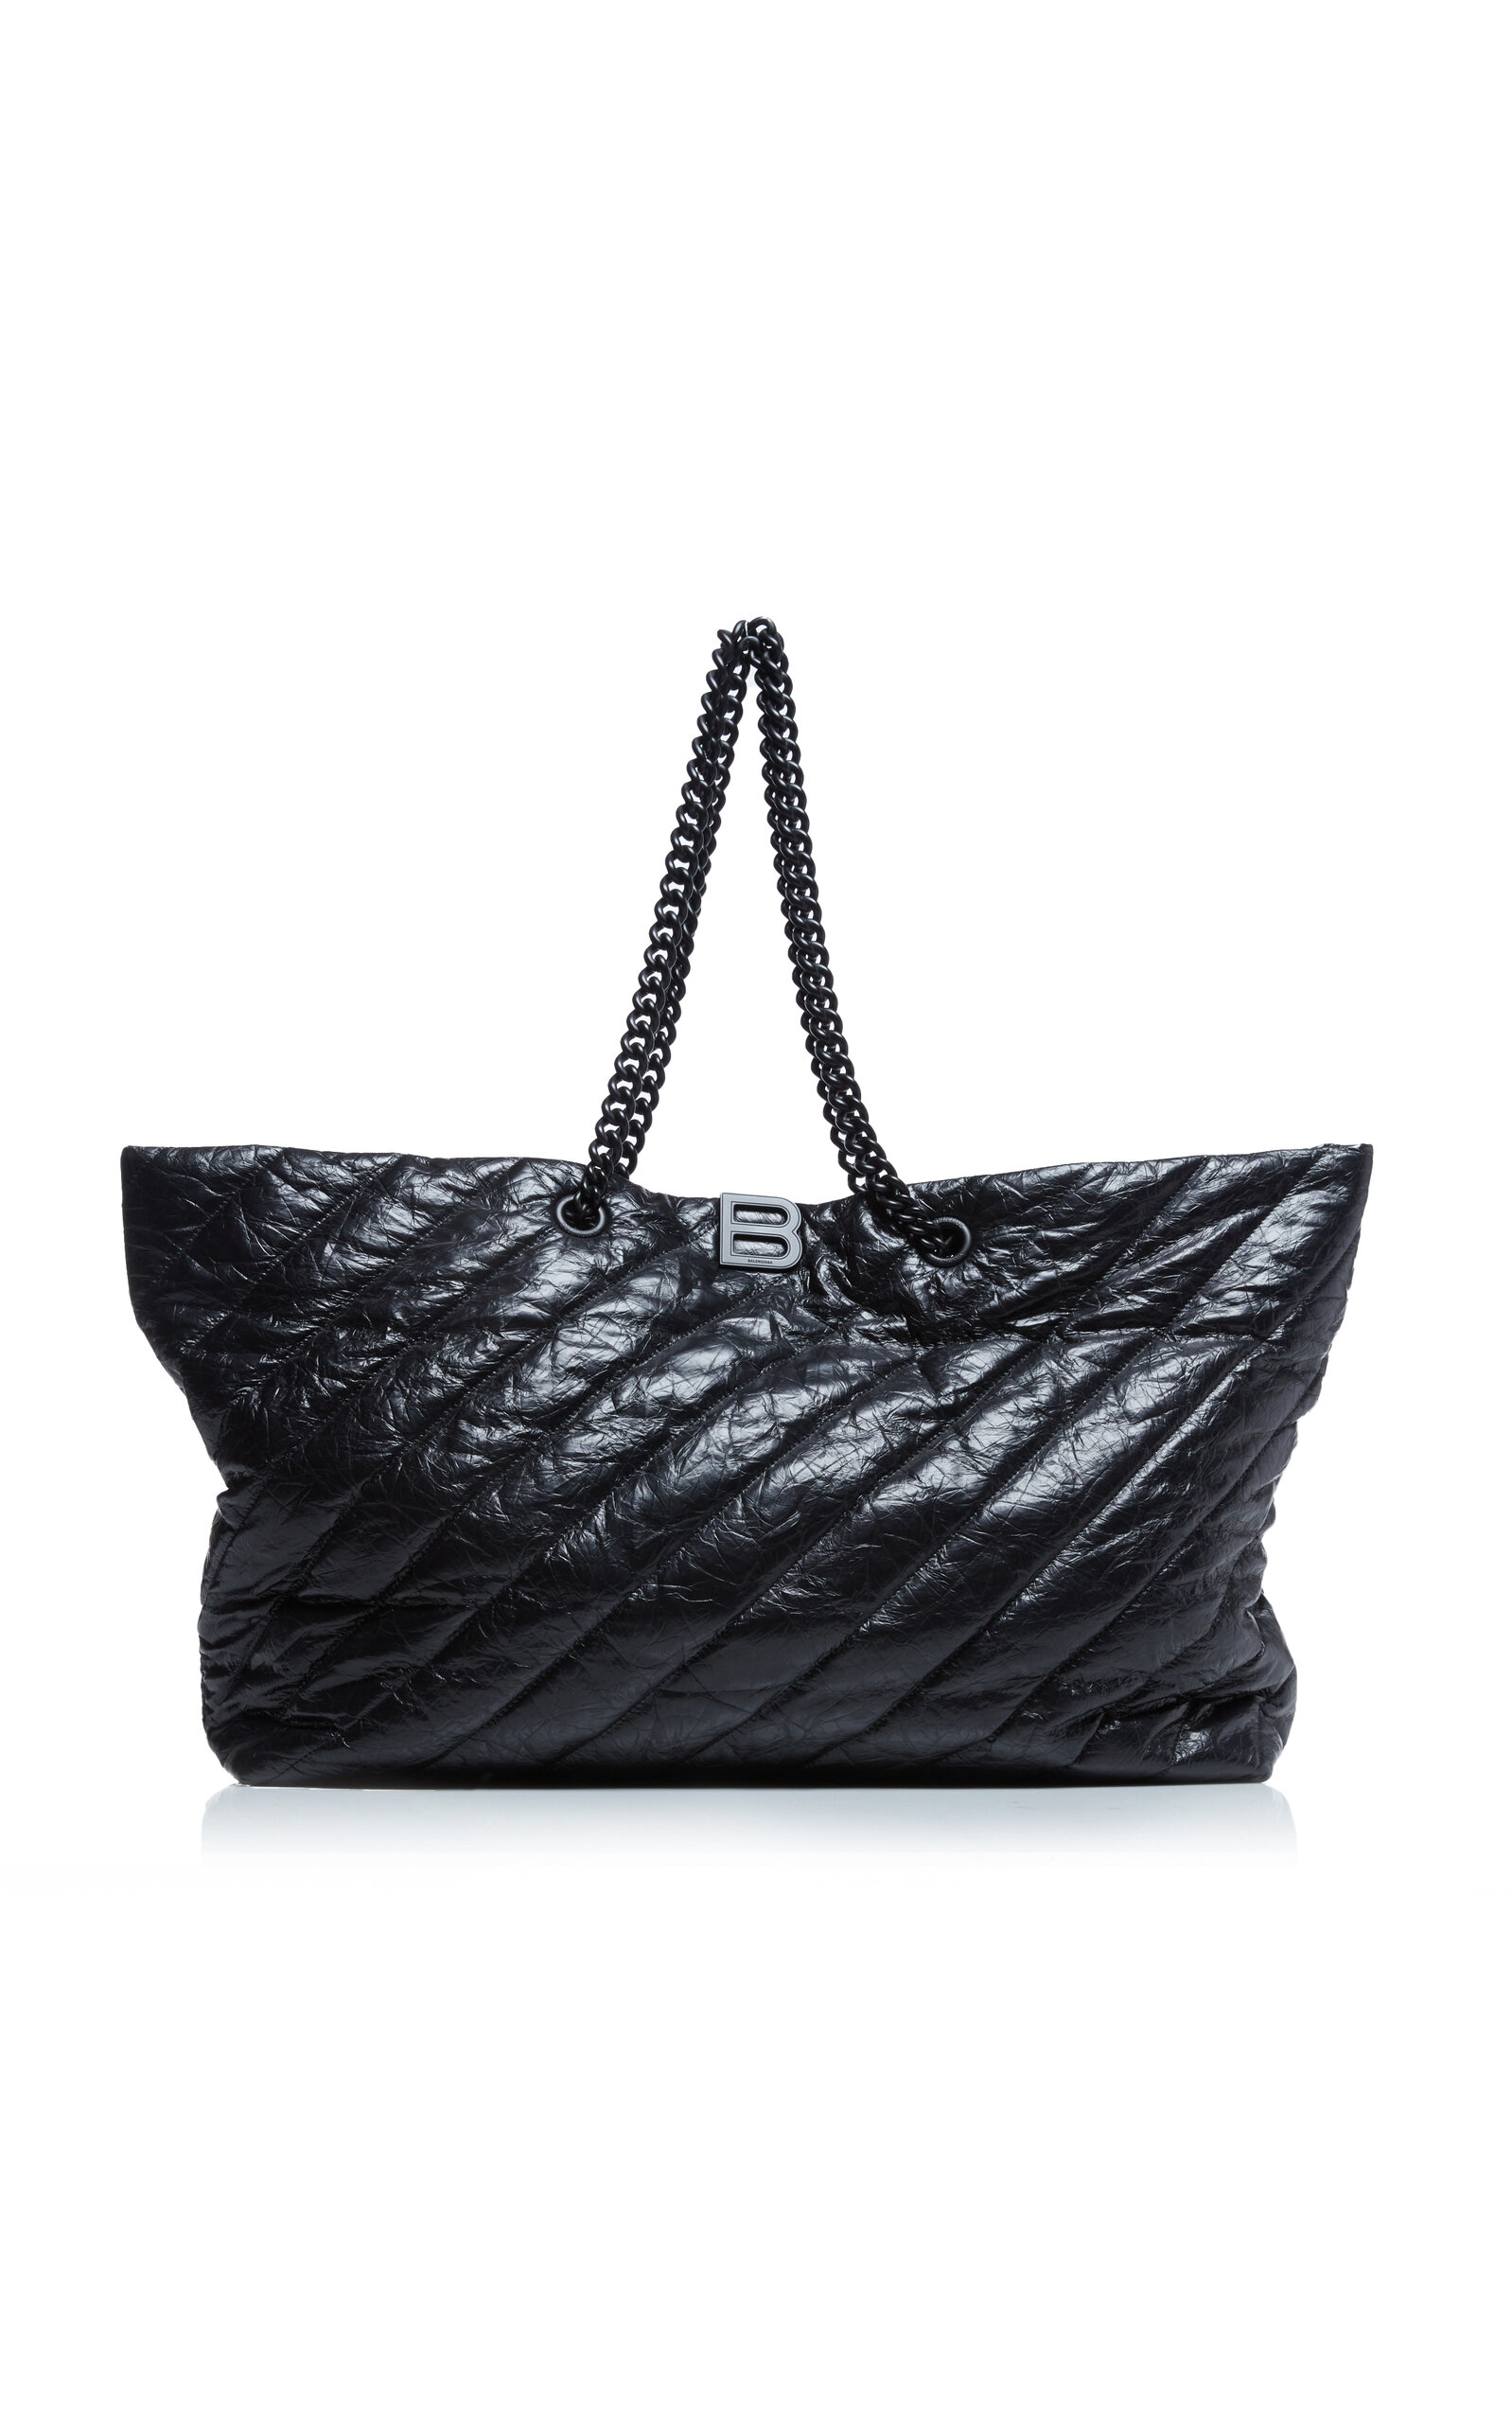 Balenciaga - Crush Carry-All Quilted Leather Tote Bag - Black - OS - Moda Operandi